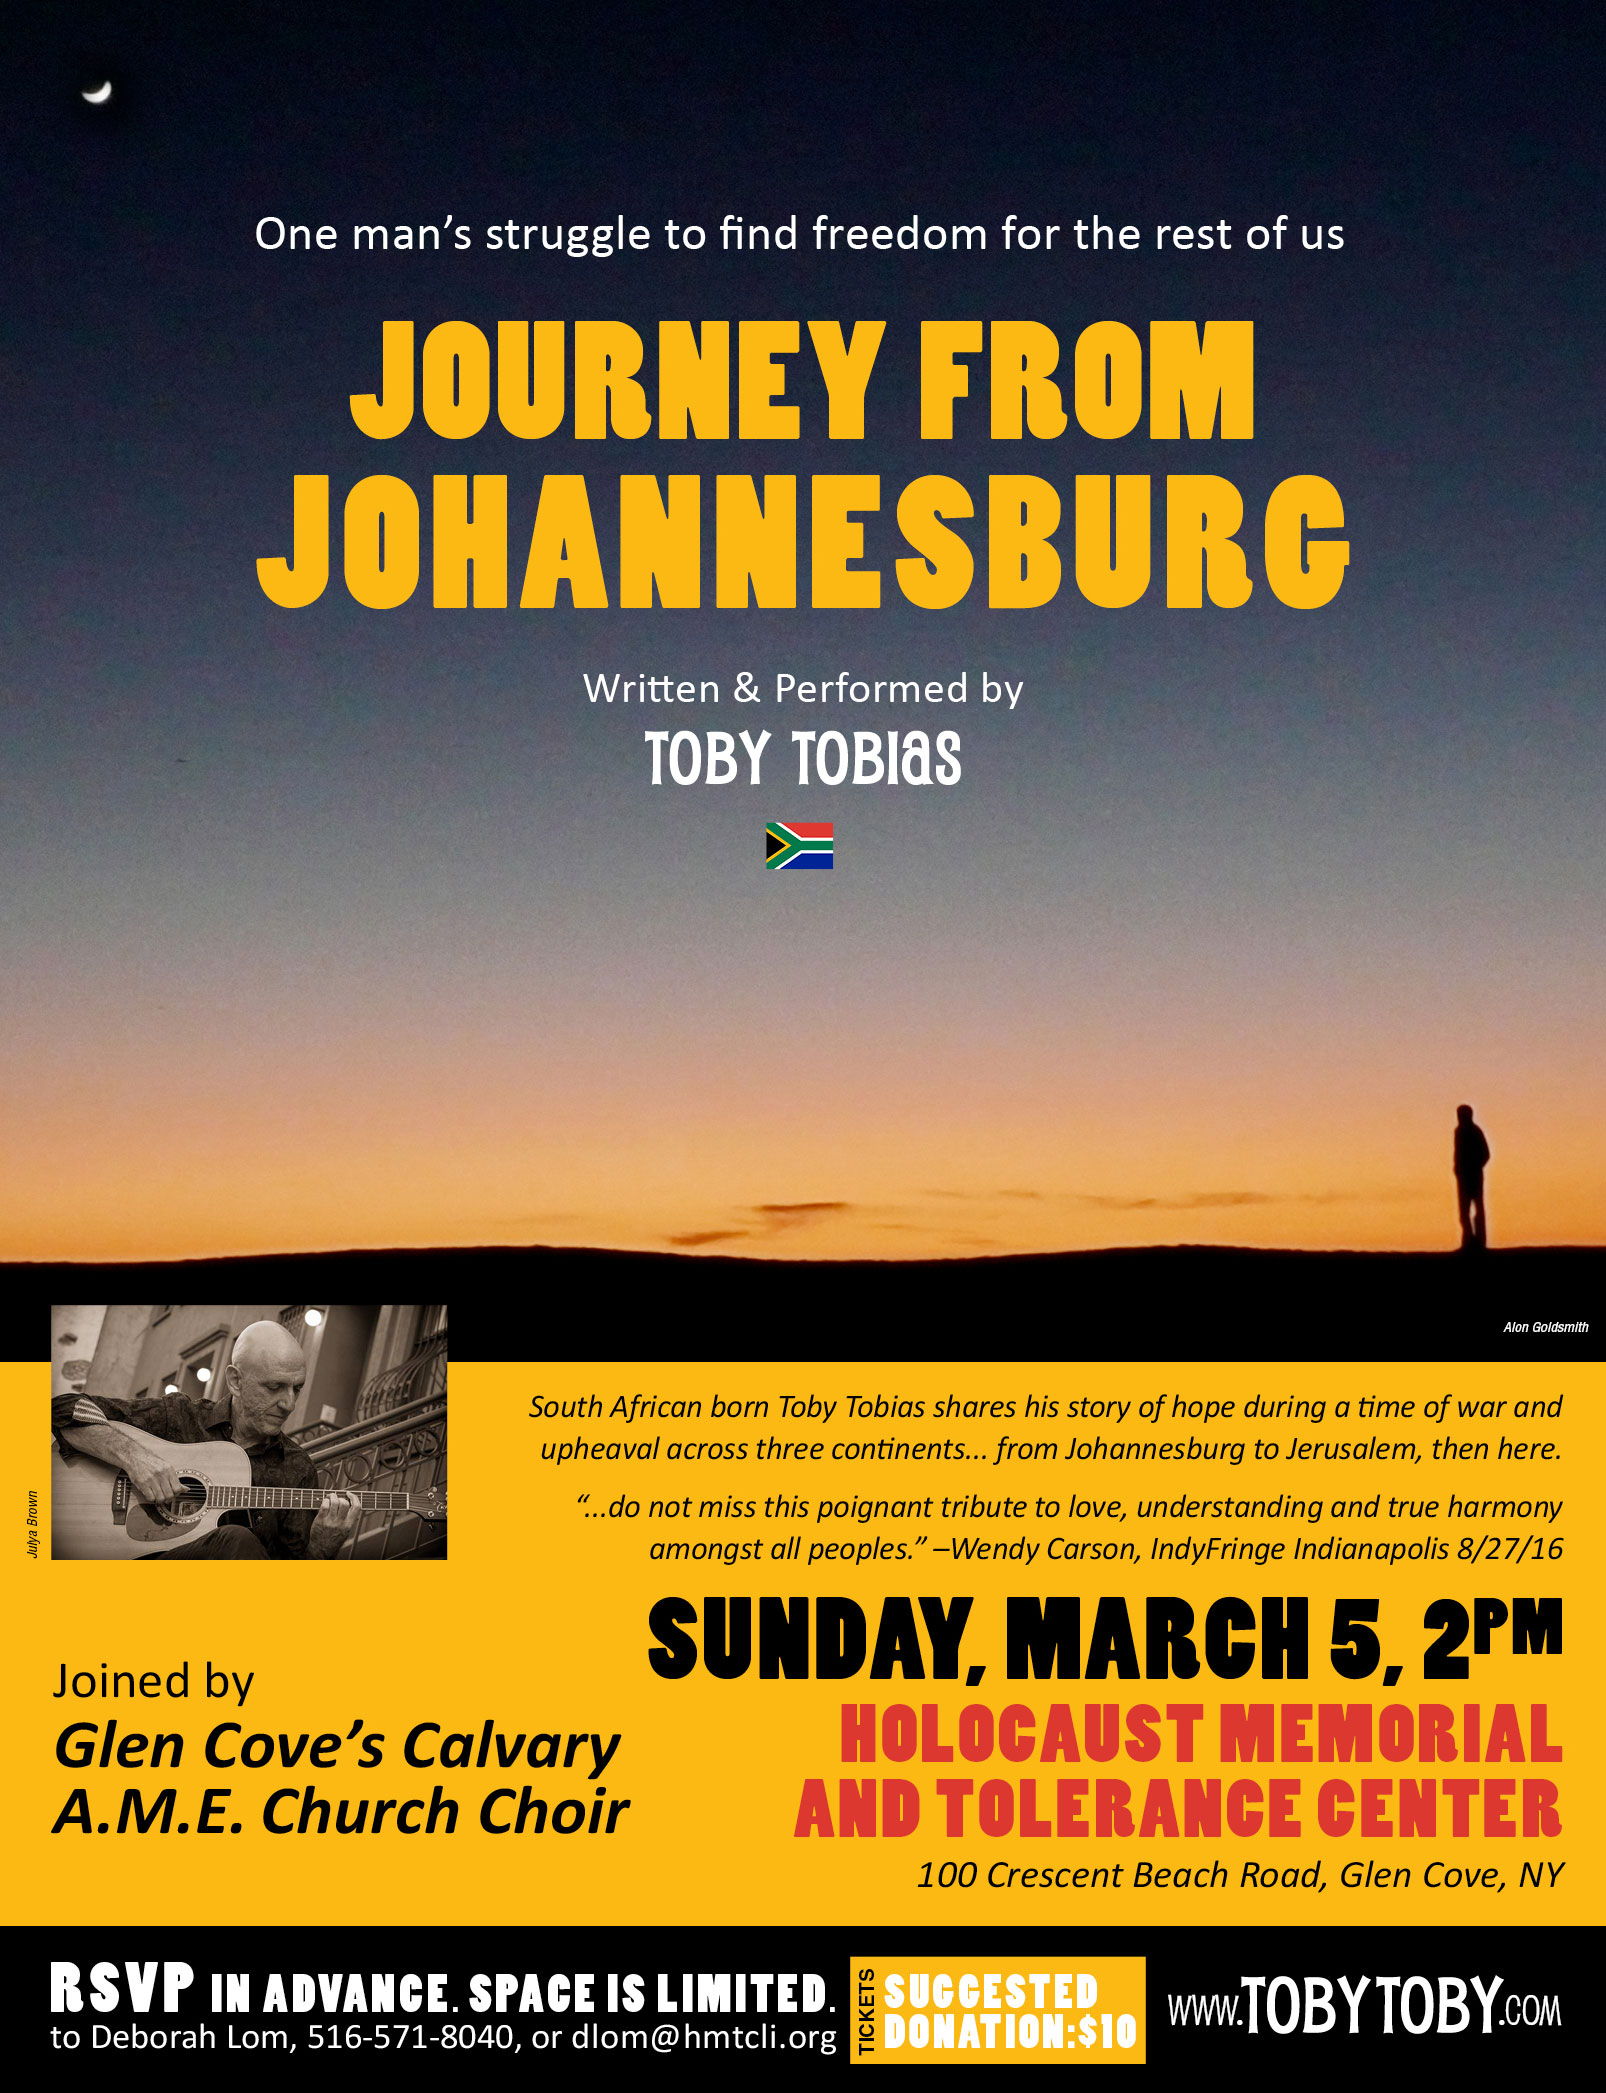 Journey From Johannesburg at the Holocaust Memorial & Tolerance Center of Glen Cove